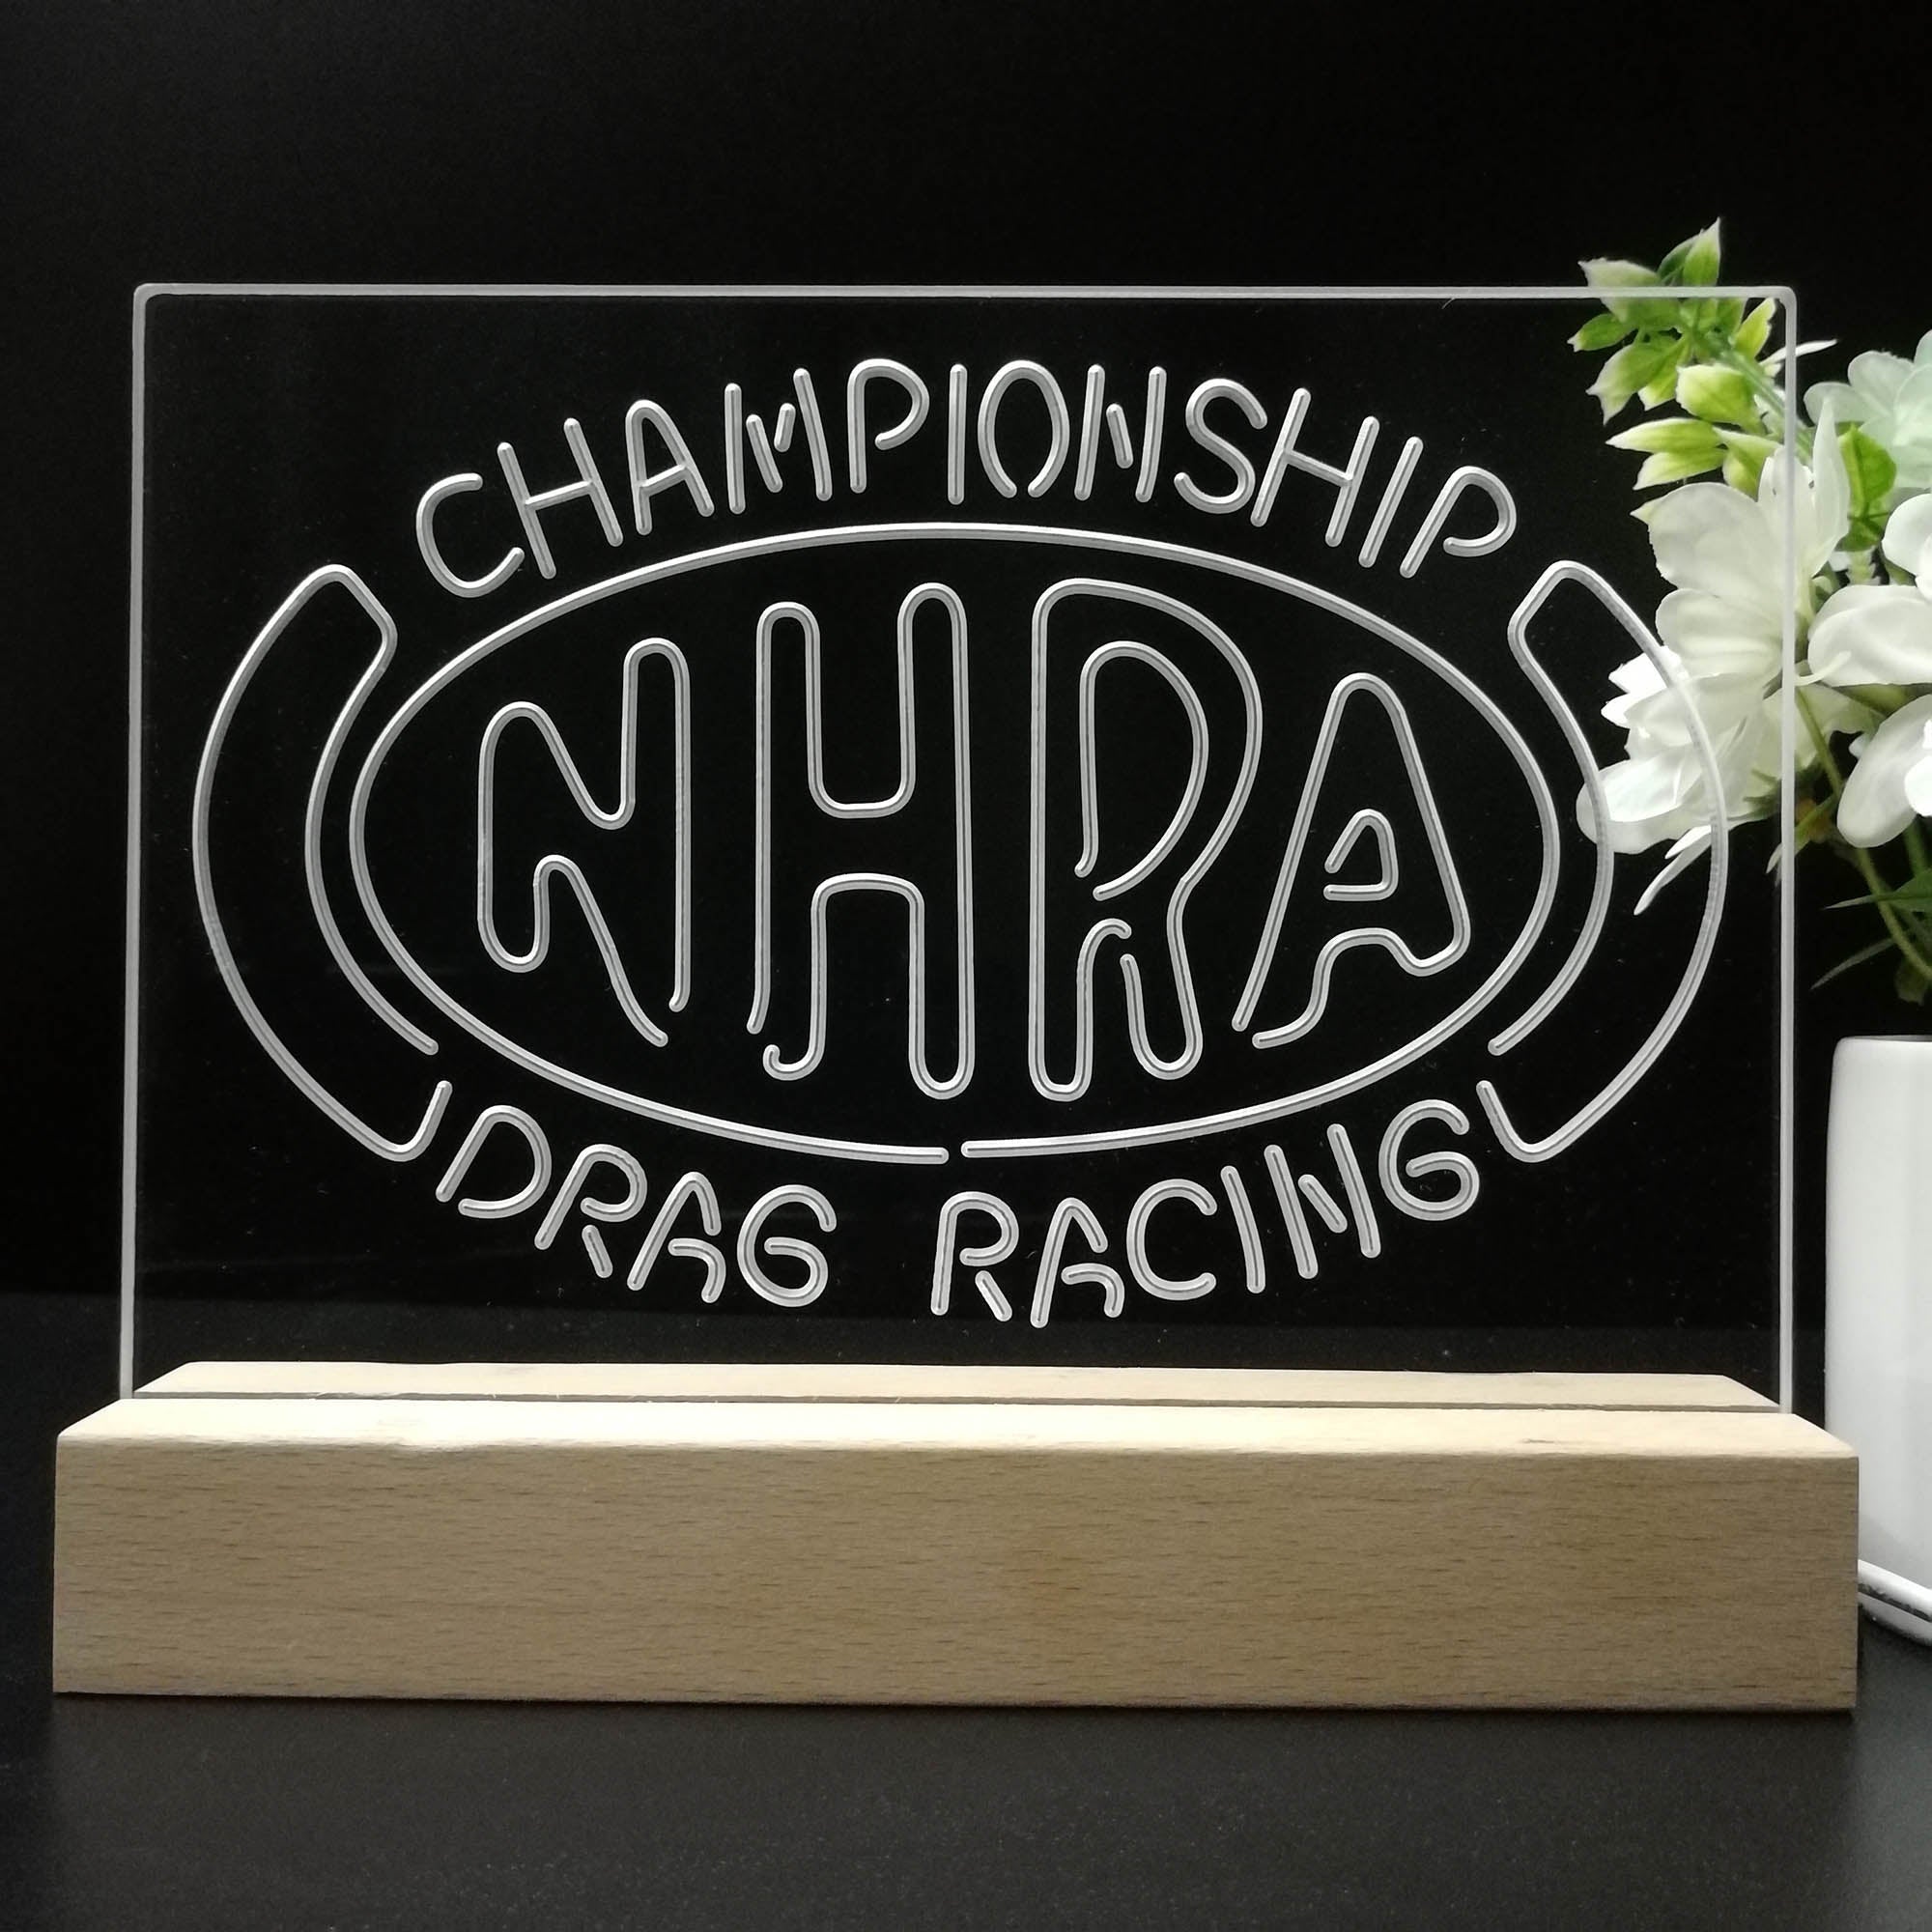 NHRA Drag Racing 3D Illusion Night Light Desk Lamp